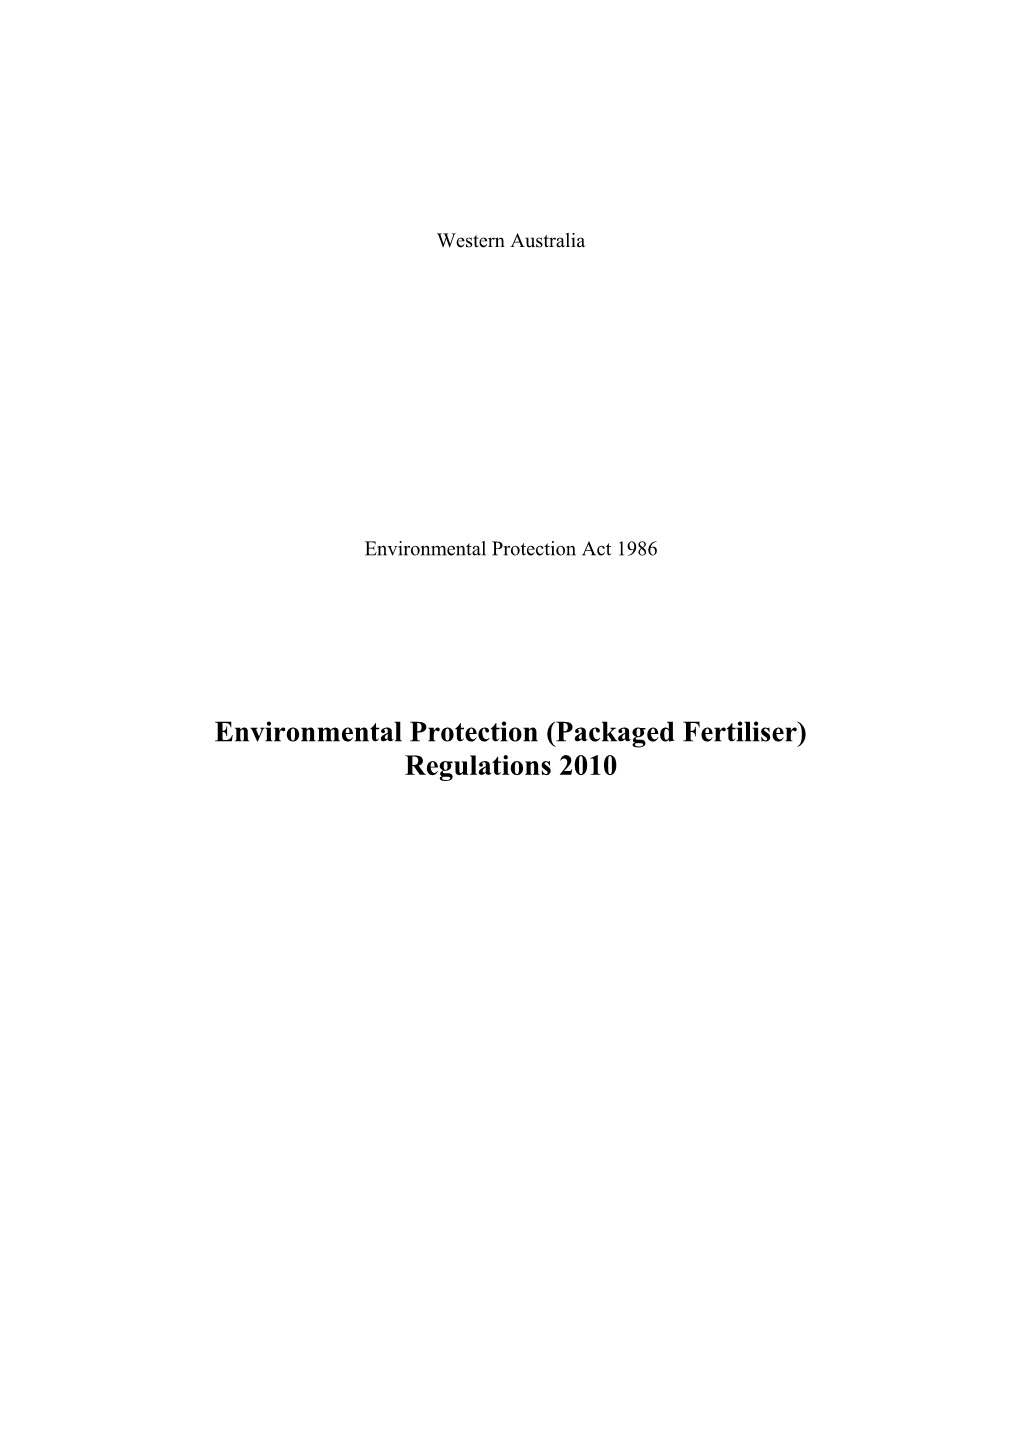 Environmental Protection (Packaged Fertiliser) Regulations 2010 - 00-A0-00